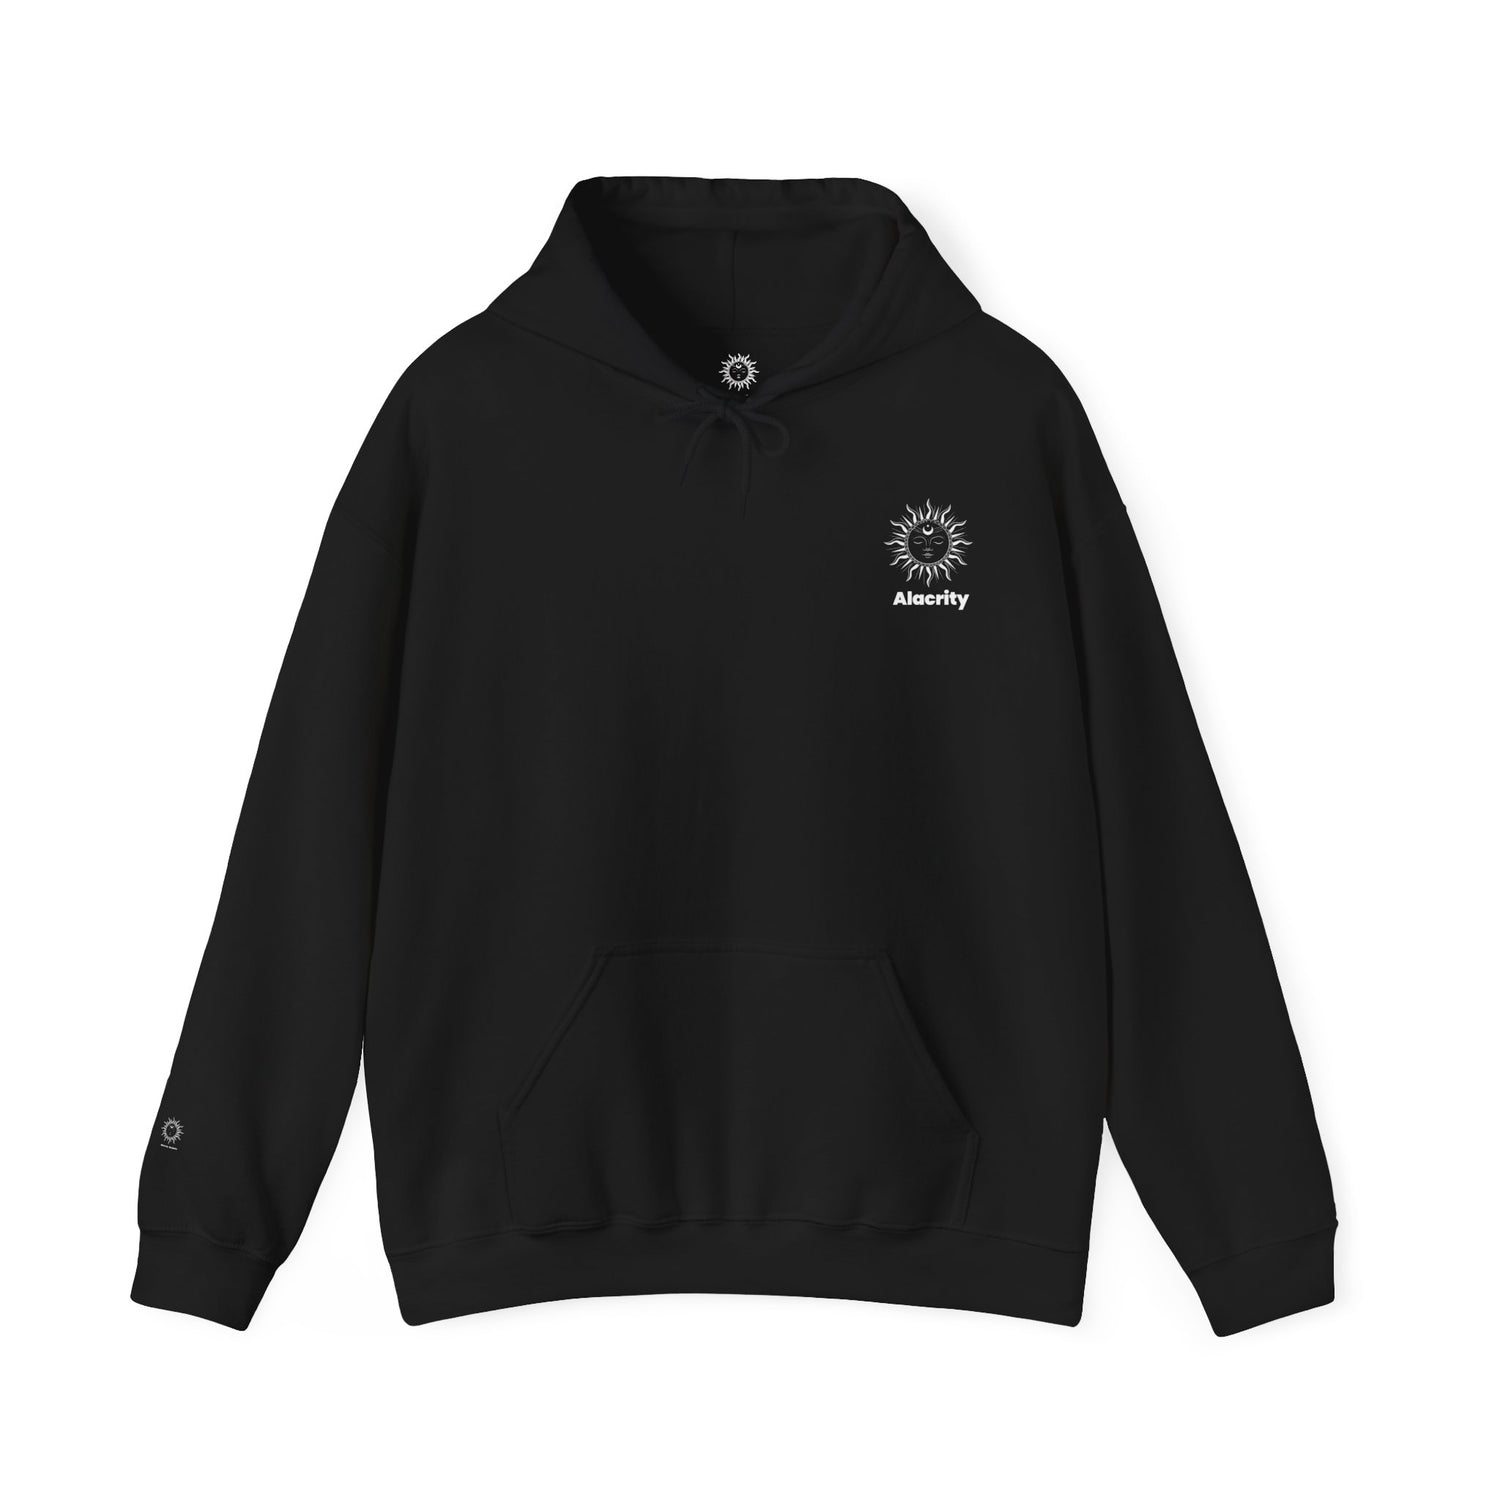 (Back Print) Alacrity Sun Designer Hoodie - Unisex Heavy Blend Sweatshirt with Alacrity Prints Logo, Cozy & Stylish - Black/Forest Green